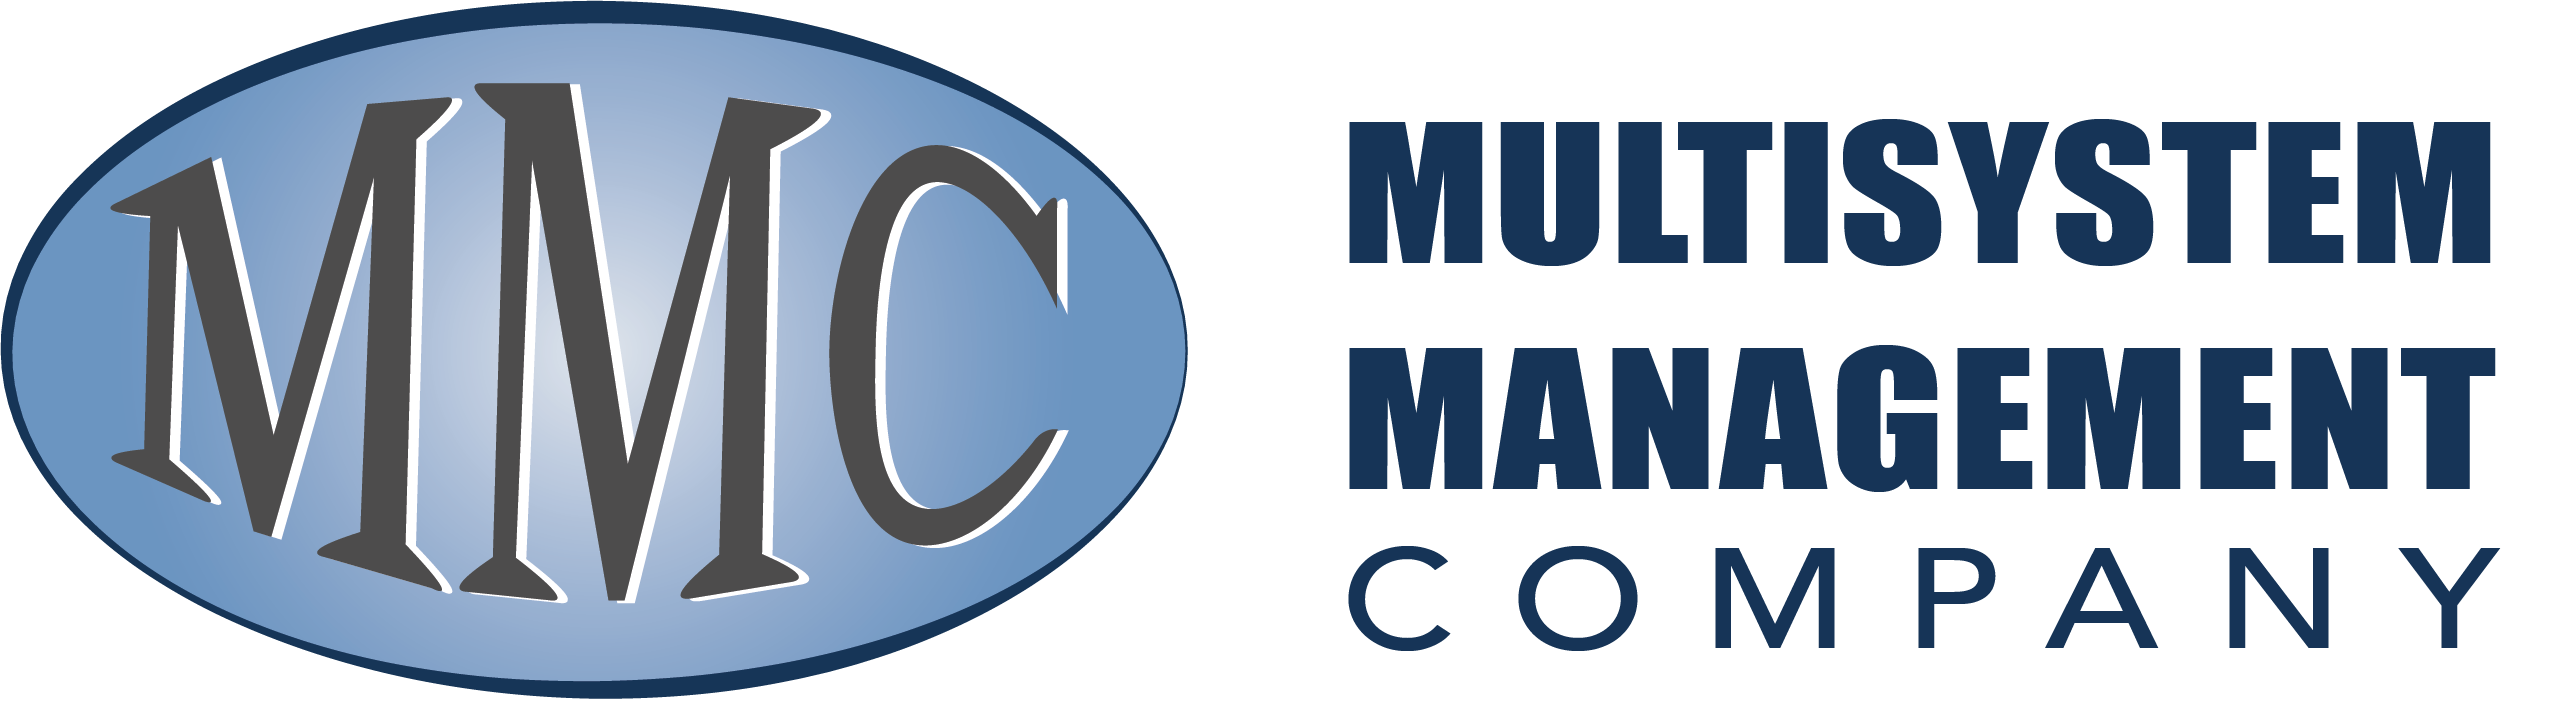 Multisystem Management Company